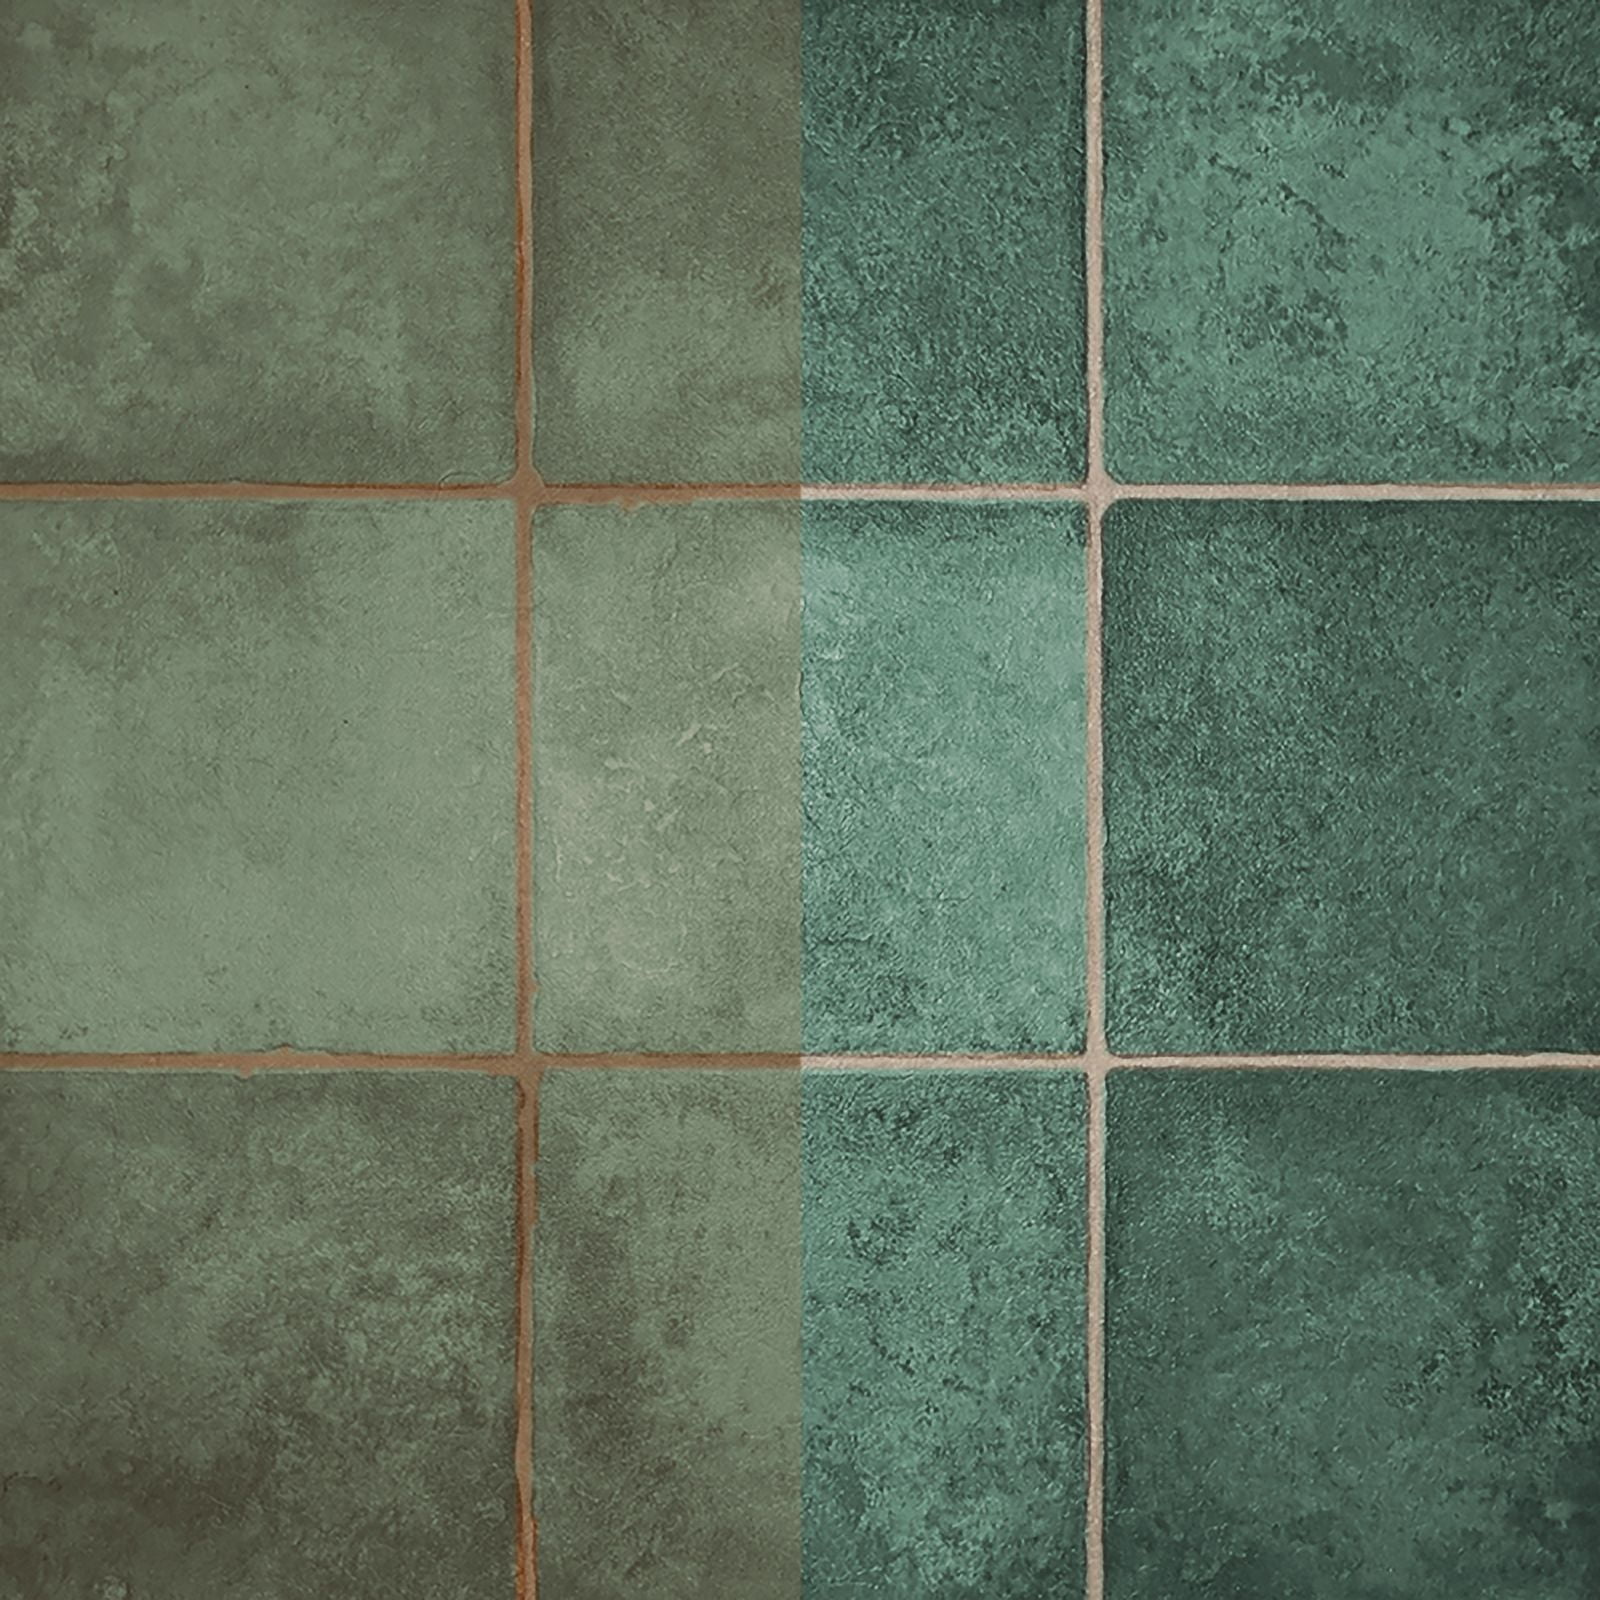 Rejuvenate Bio-Enzymatic Tile and Grout Cleaner 32-fl oz Unscented Liquid  Floor Cleaner